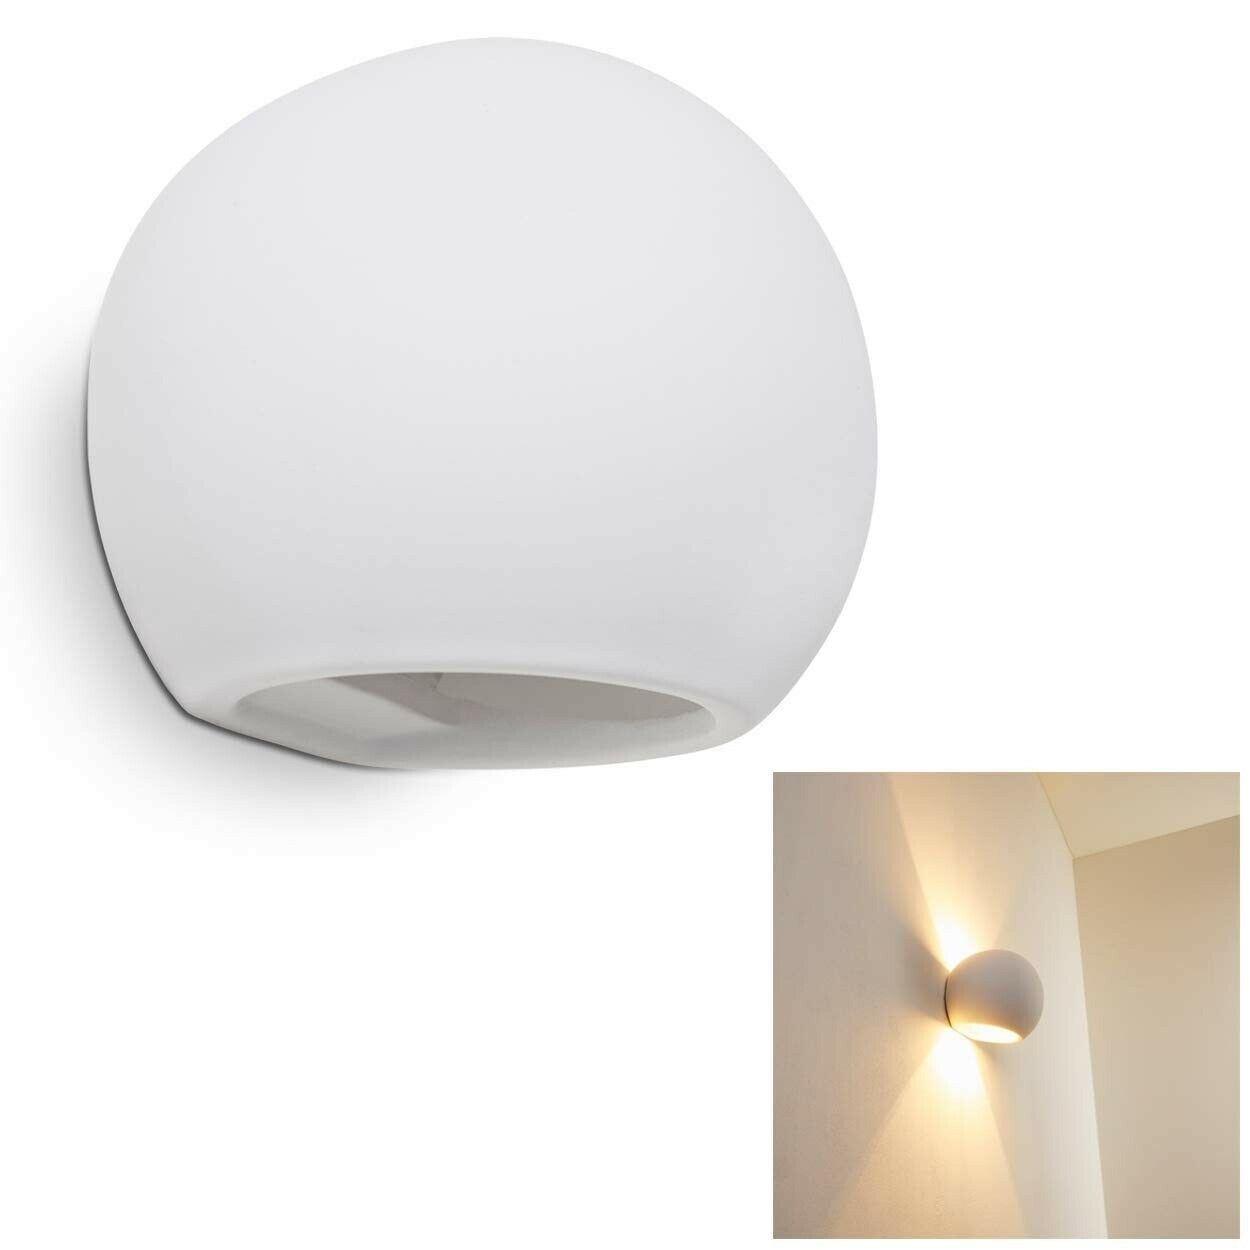 Wall lamp Flot, Light Effect, Round Design, choice of LED Bulbs, DEFECT No6522